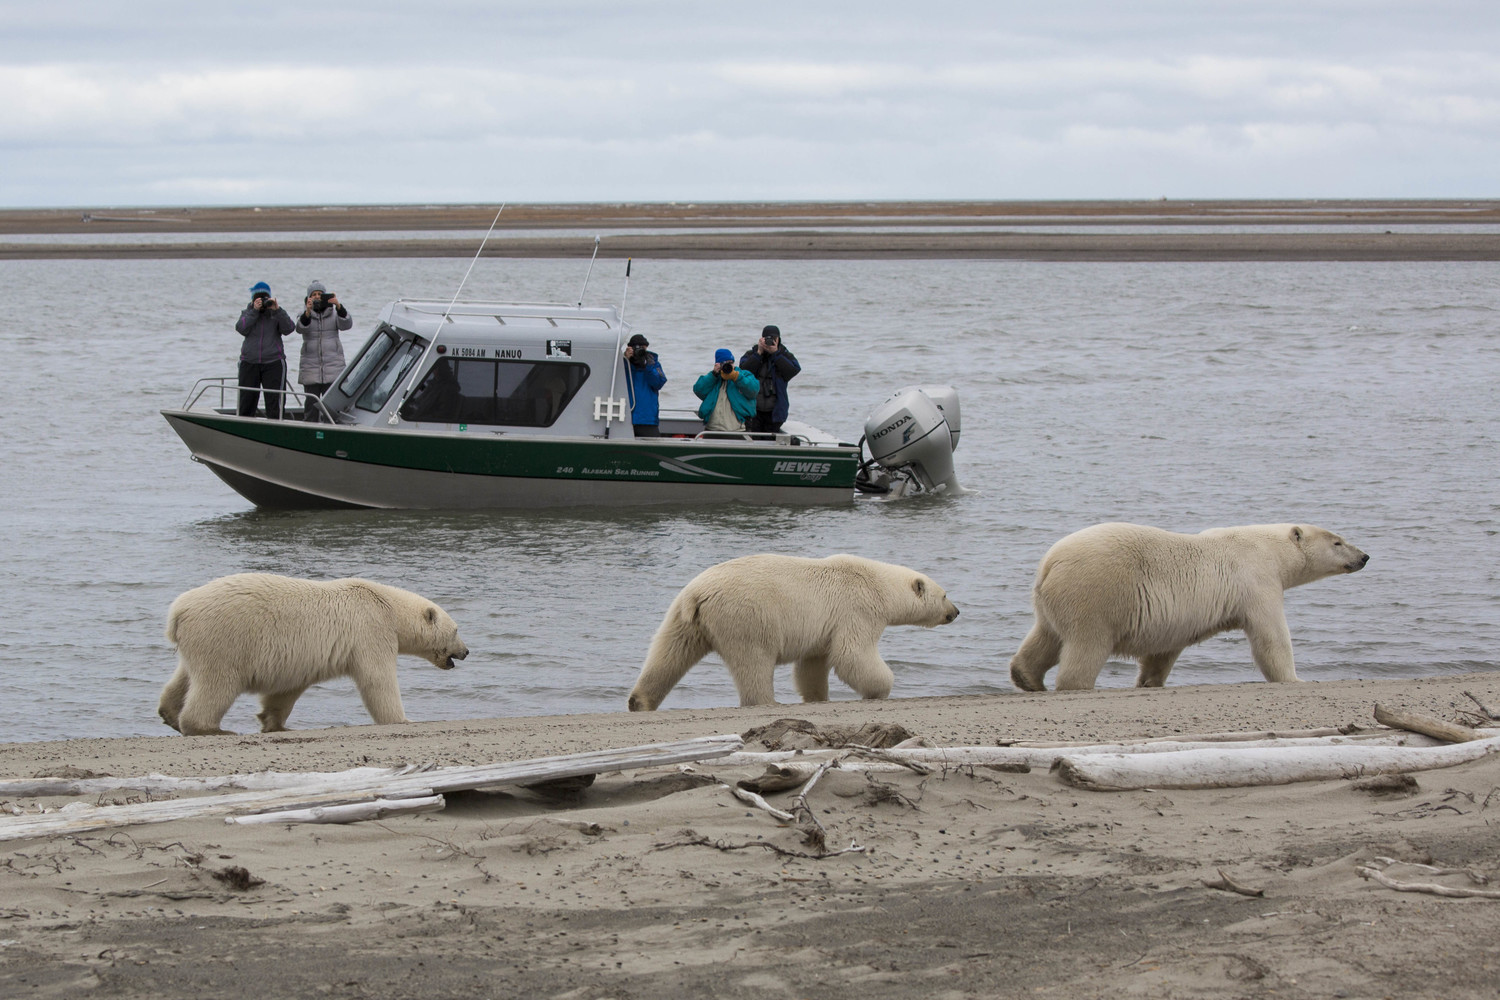 People on a boat watch polar bears walk on the shore